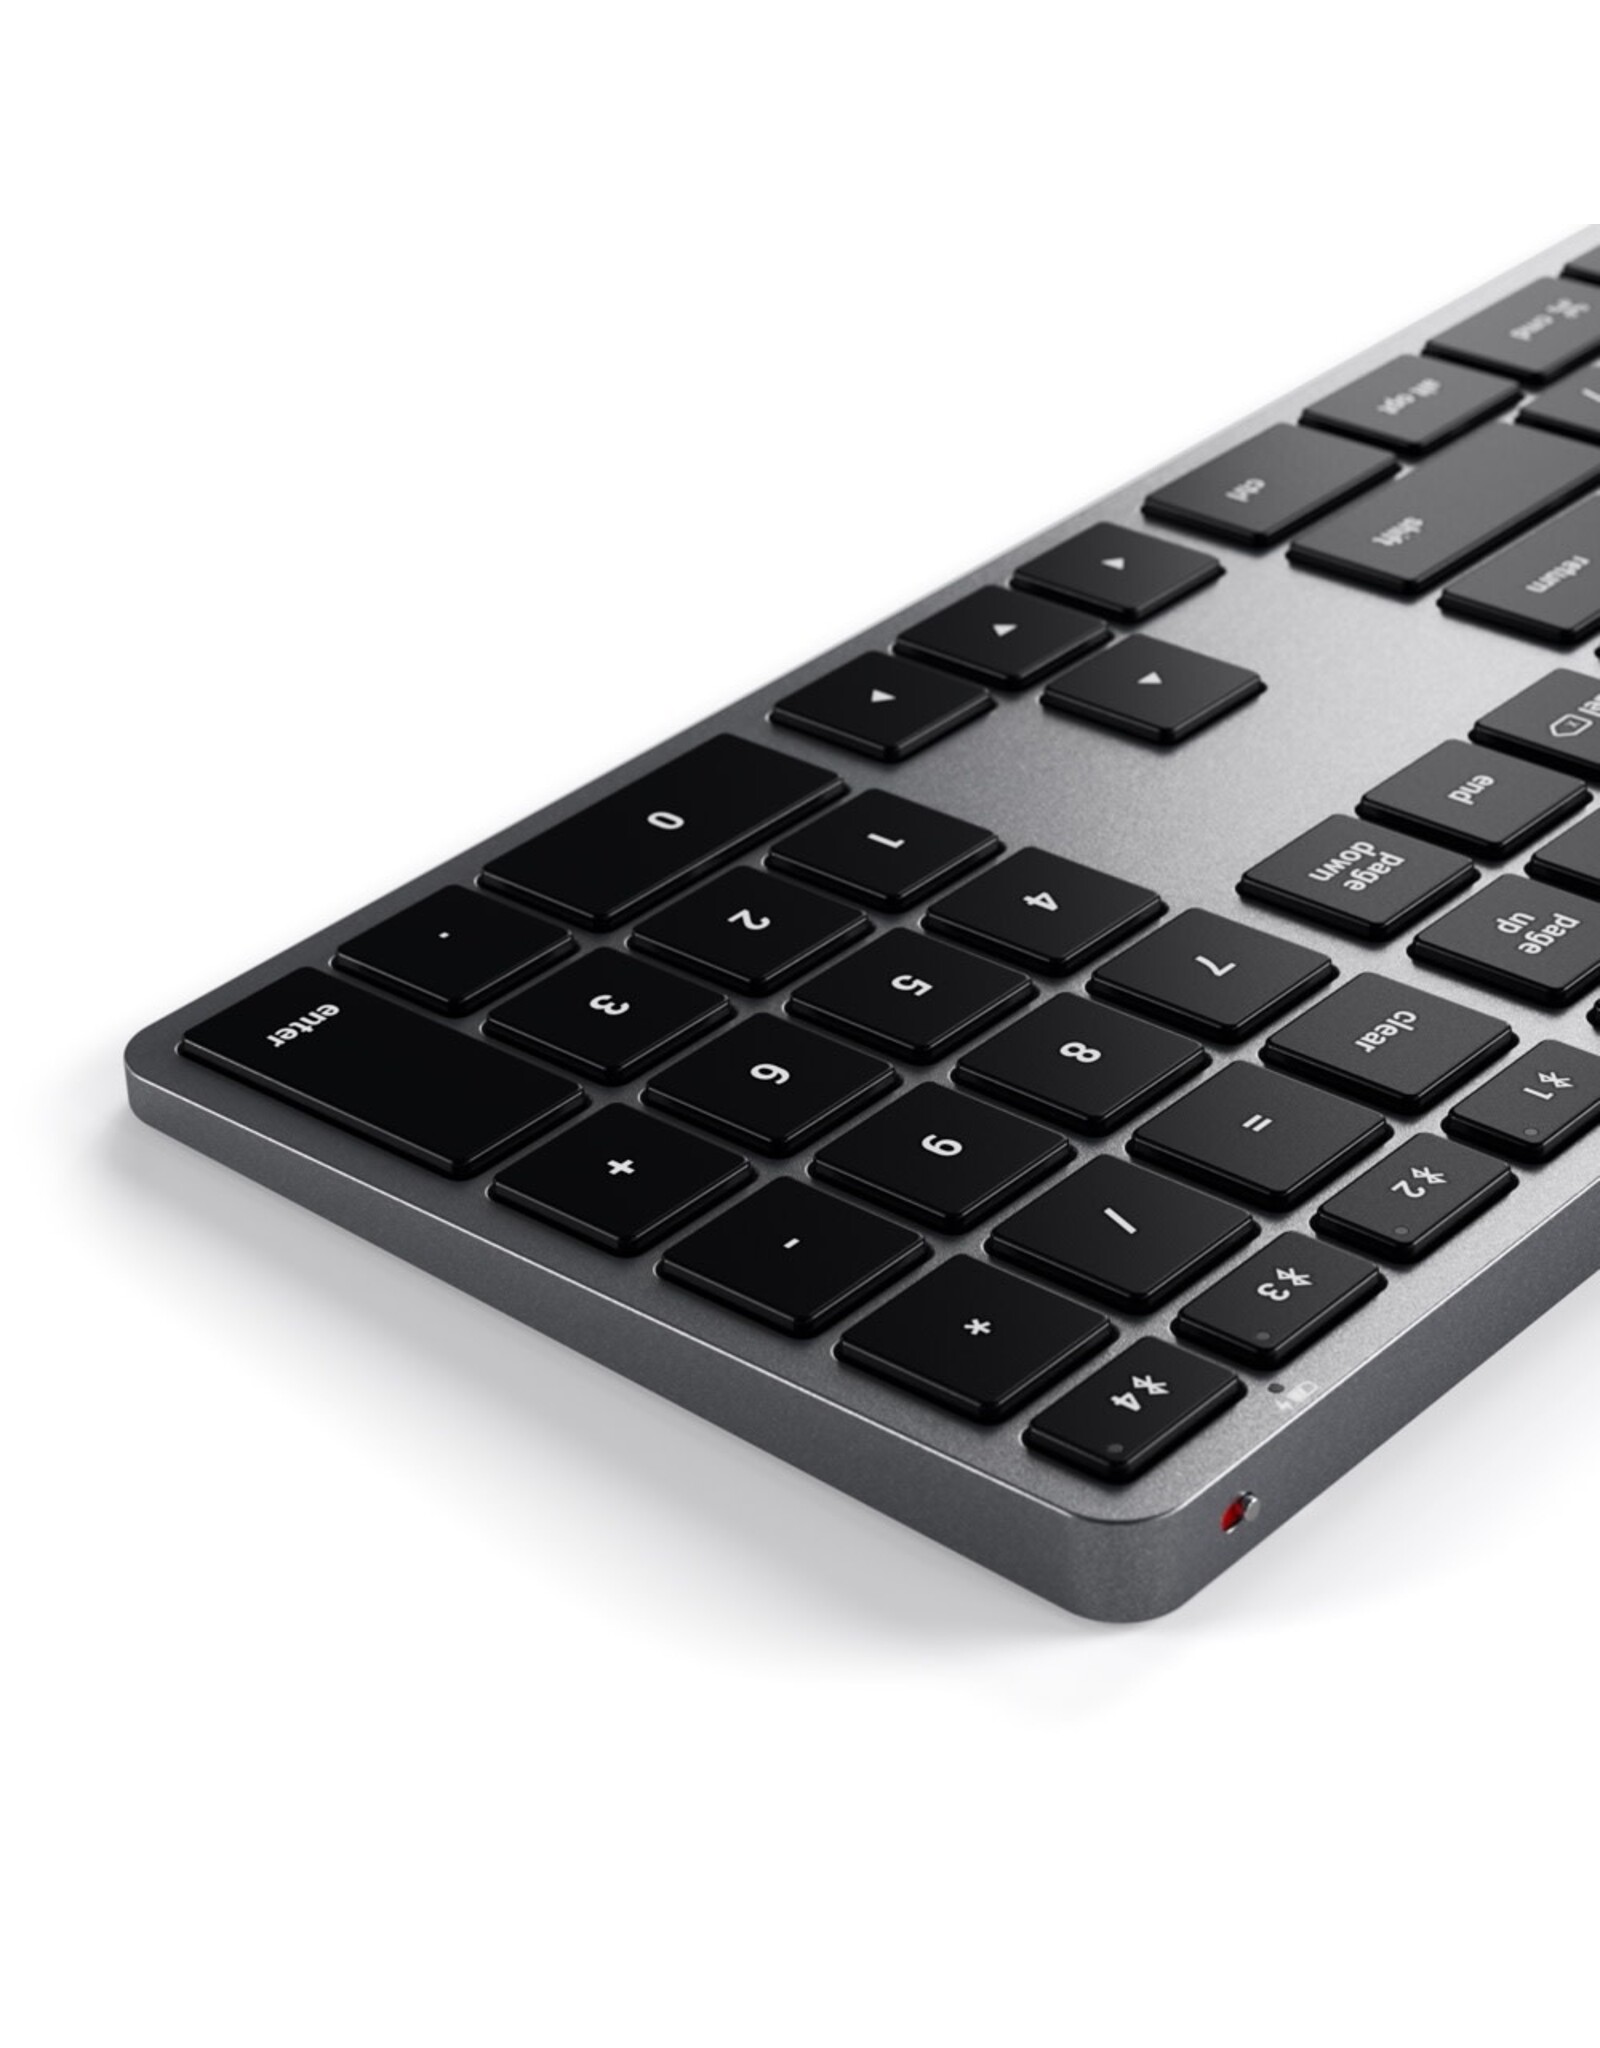 Satechi Satechi Slim X3 Bluetooth Backlit Keyboard with Numeric Keypad - Space Grey